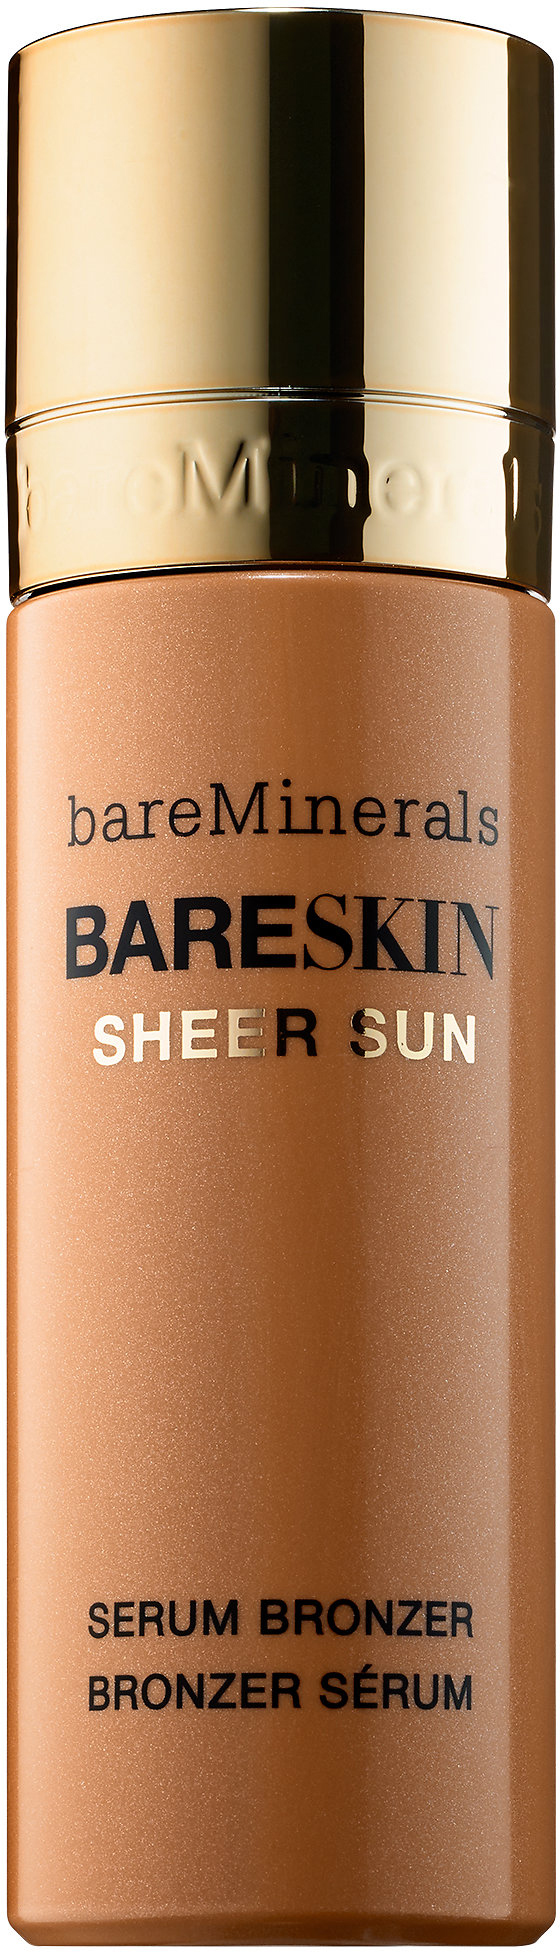 bareMinerals Bareskin Sheer Sun Serum Bronzer 30ml